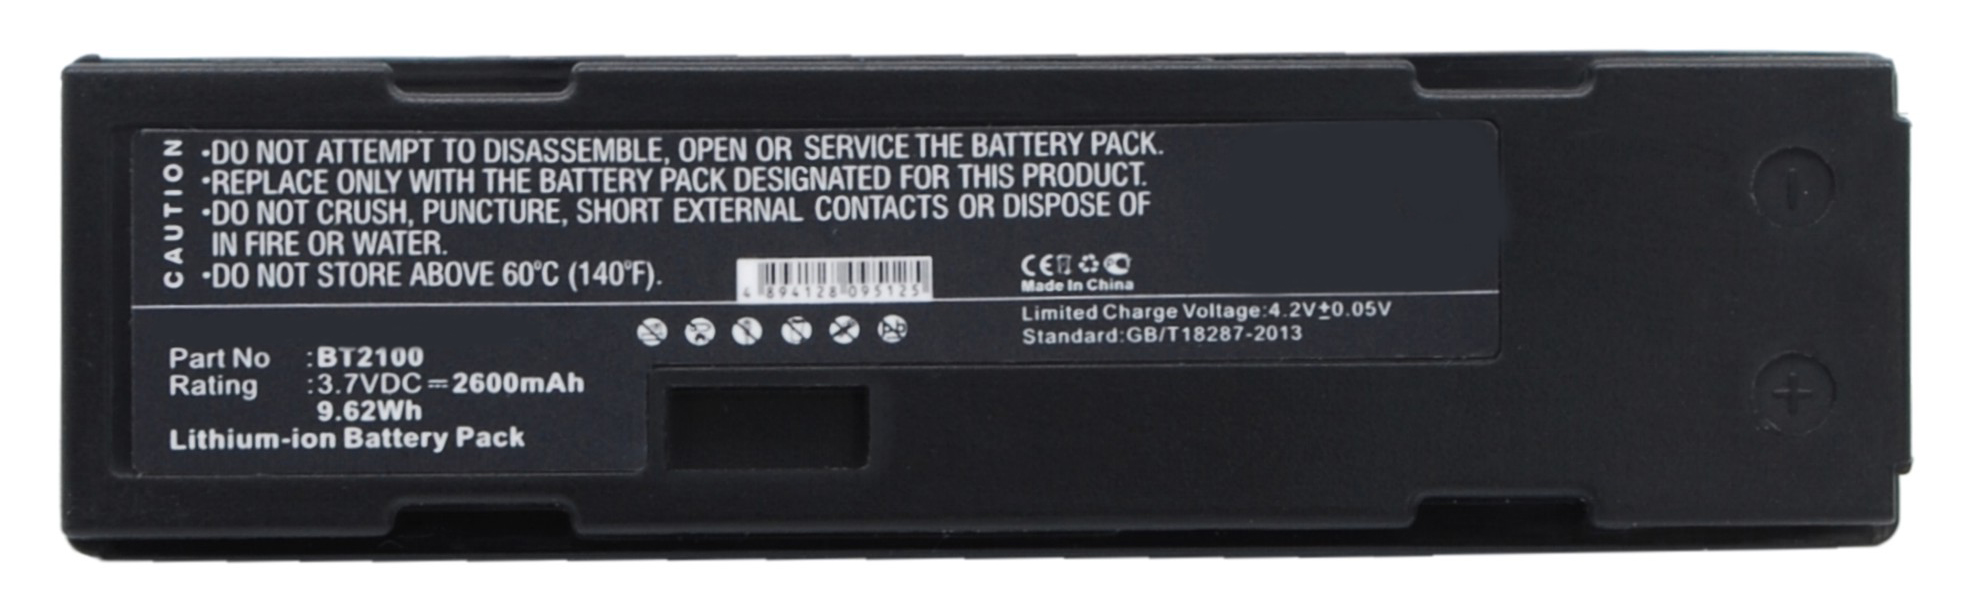 Batteries for CINOBarcode Scanner